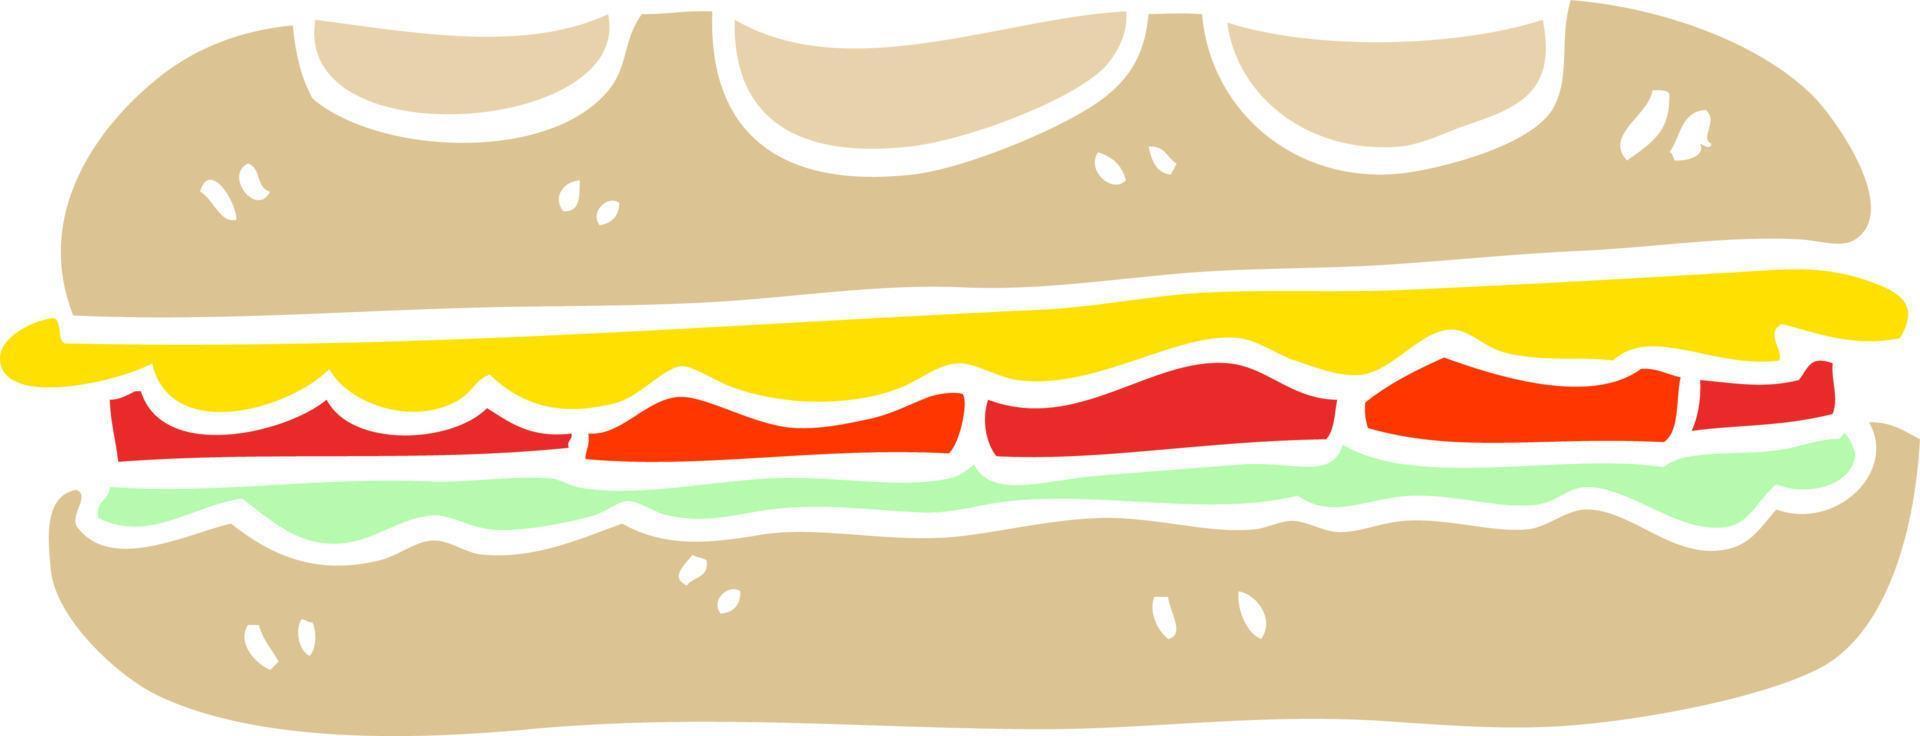 flat color illustration cartoon tasty sandwich vector